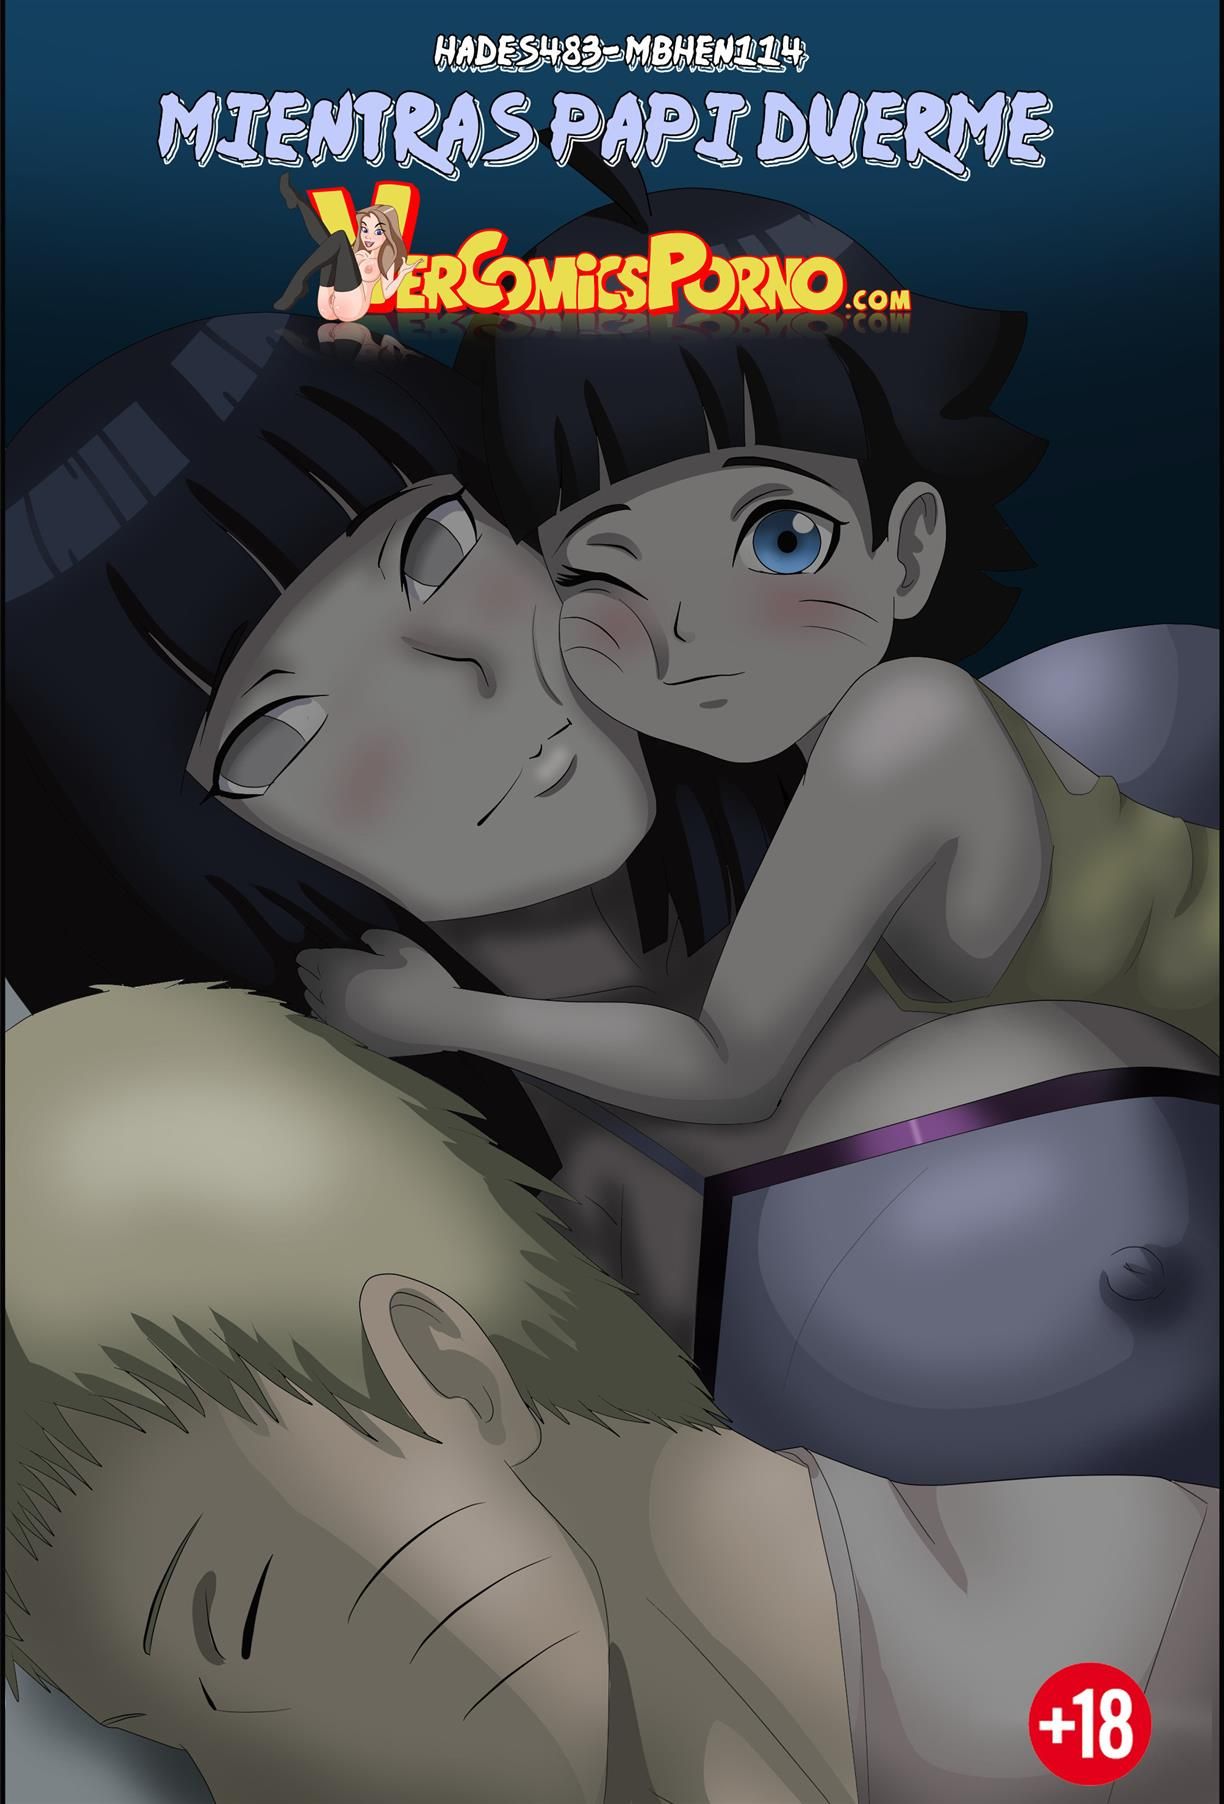 Naruto dorme, tudo acontece - Foto 1